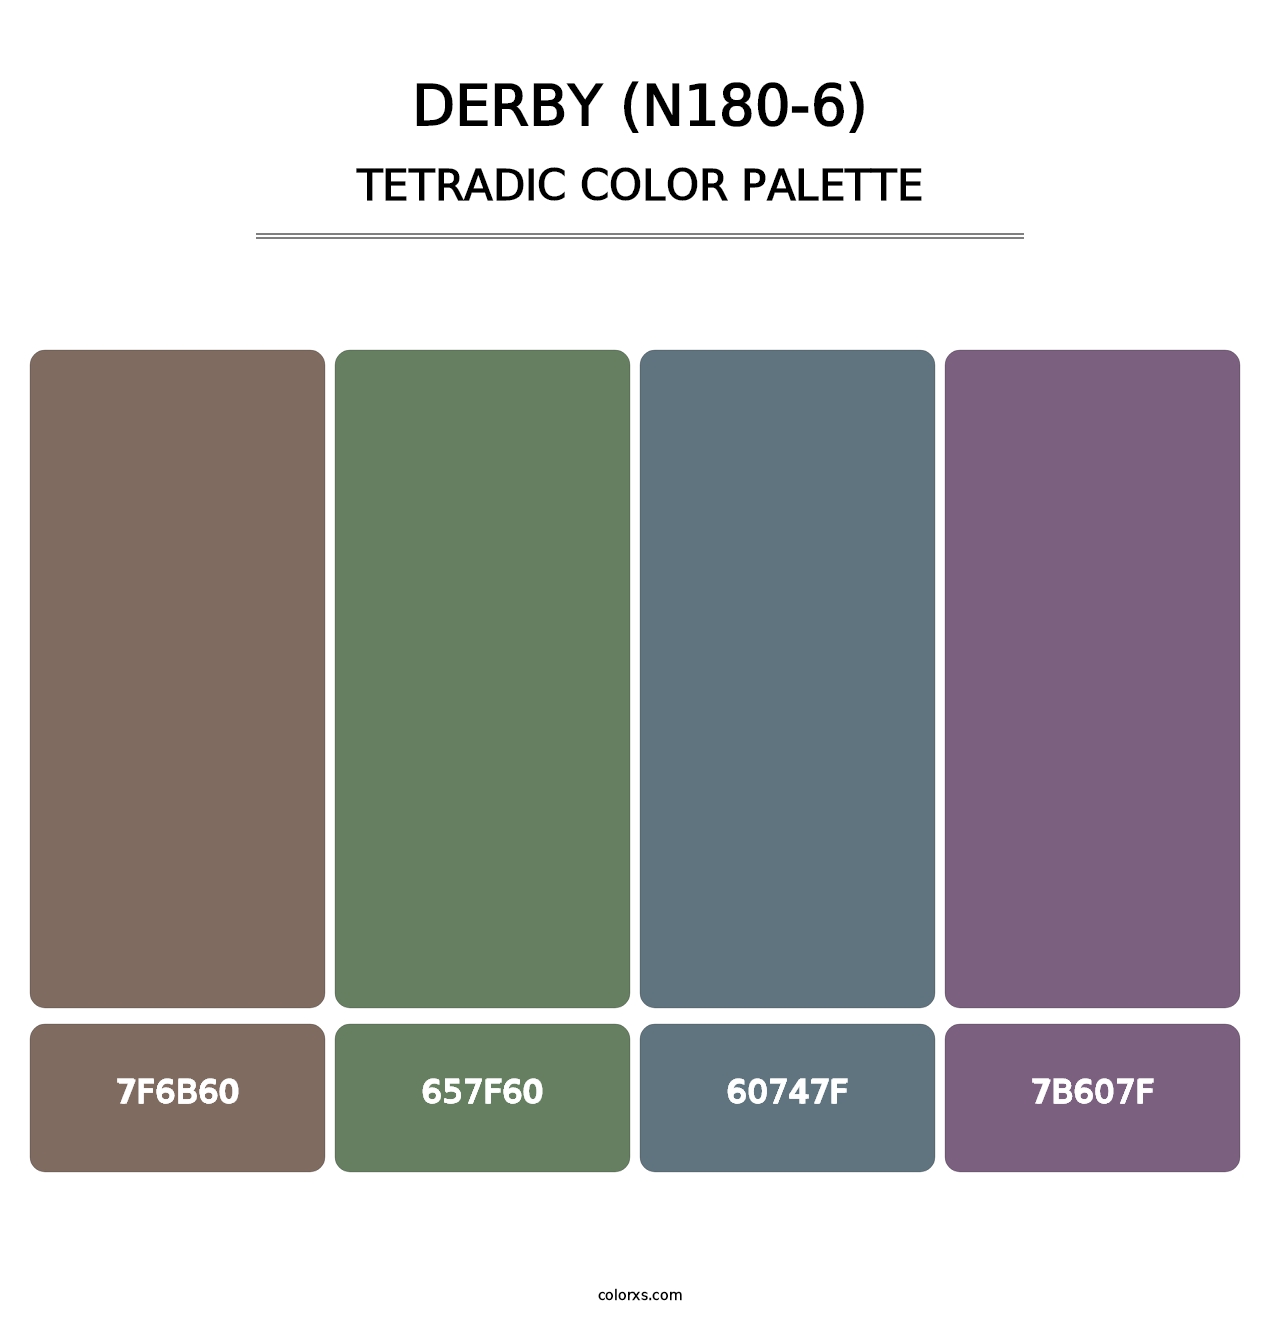 Derby (N180-6) - Tetradic Color Palette